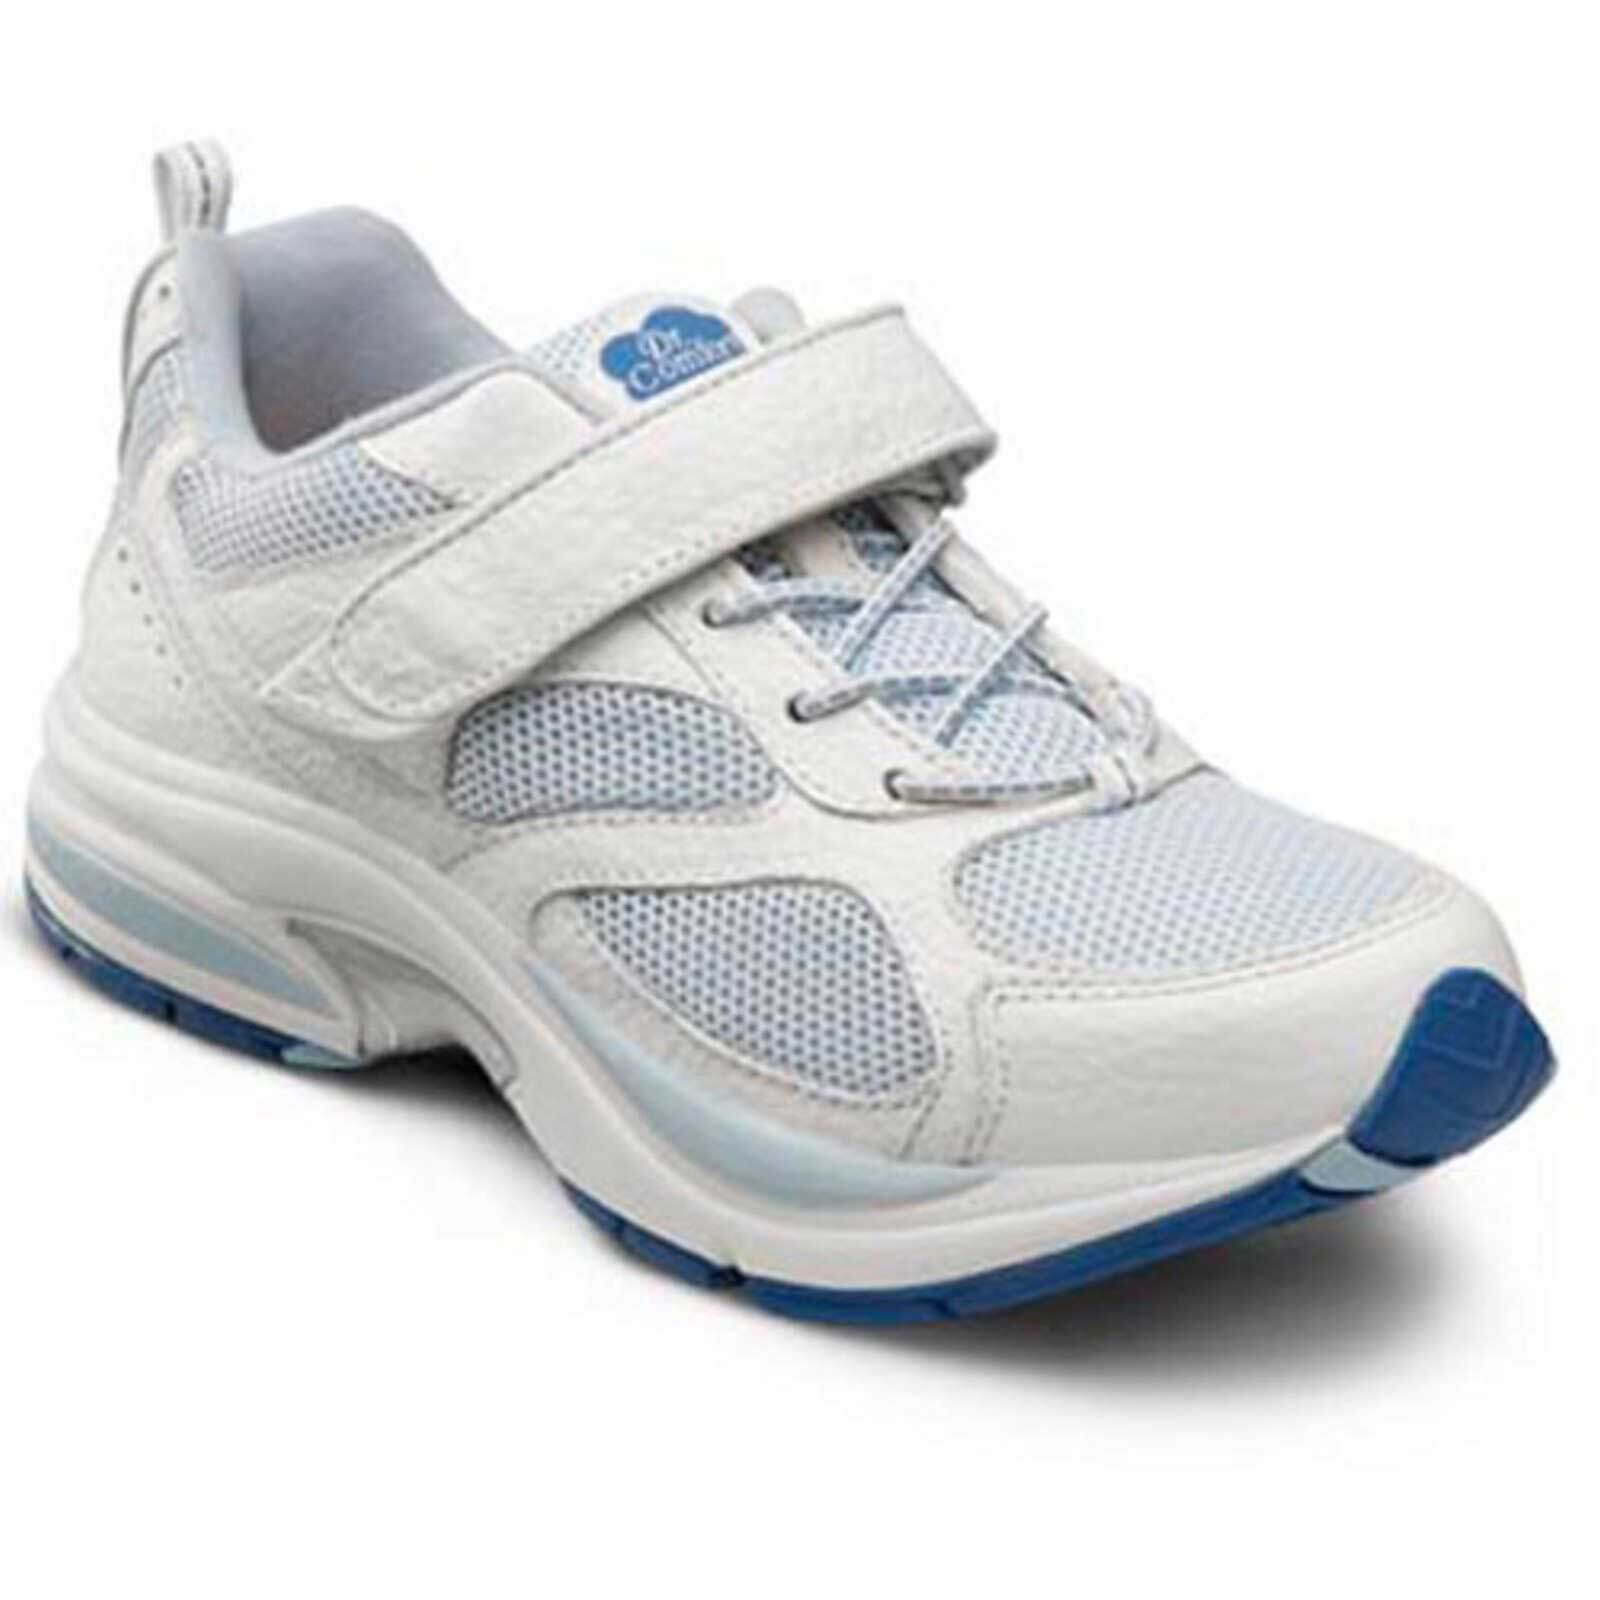 Dr Comfort Shoes Victory Women's Therapeutic Diabetic Athletic Shoe